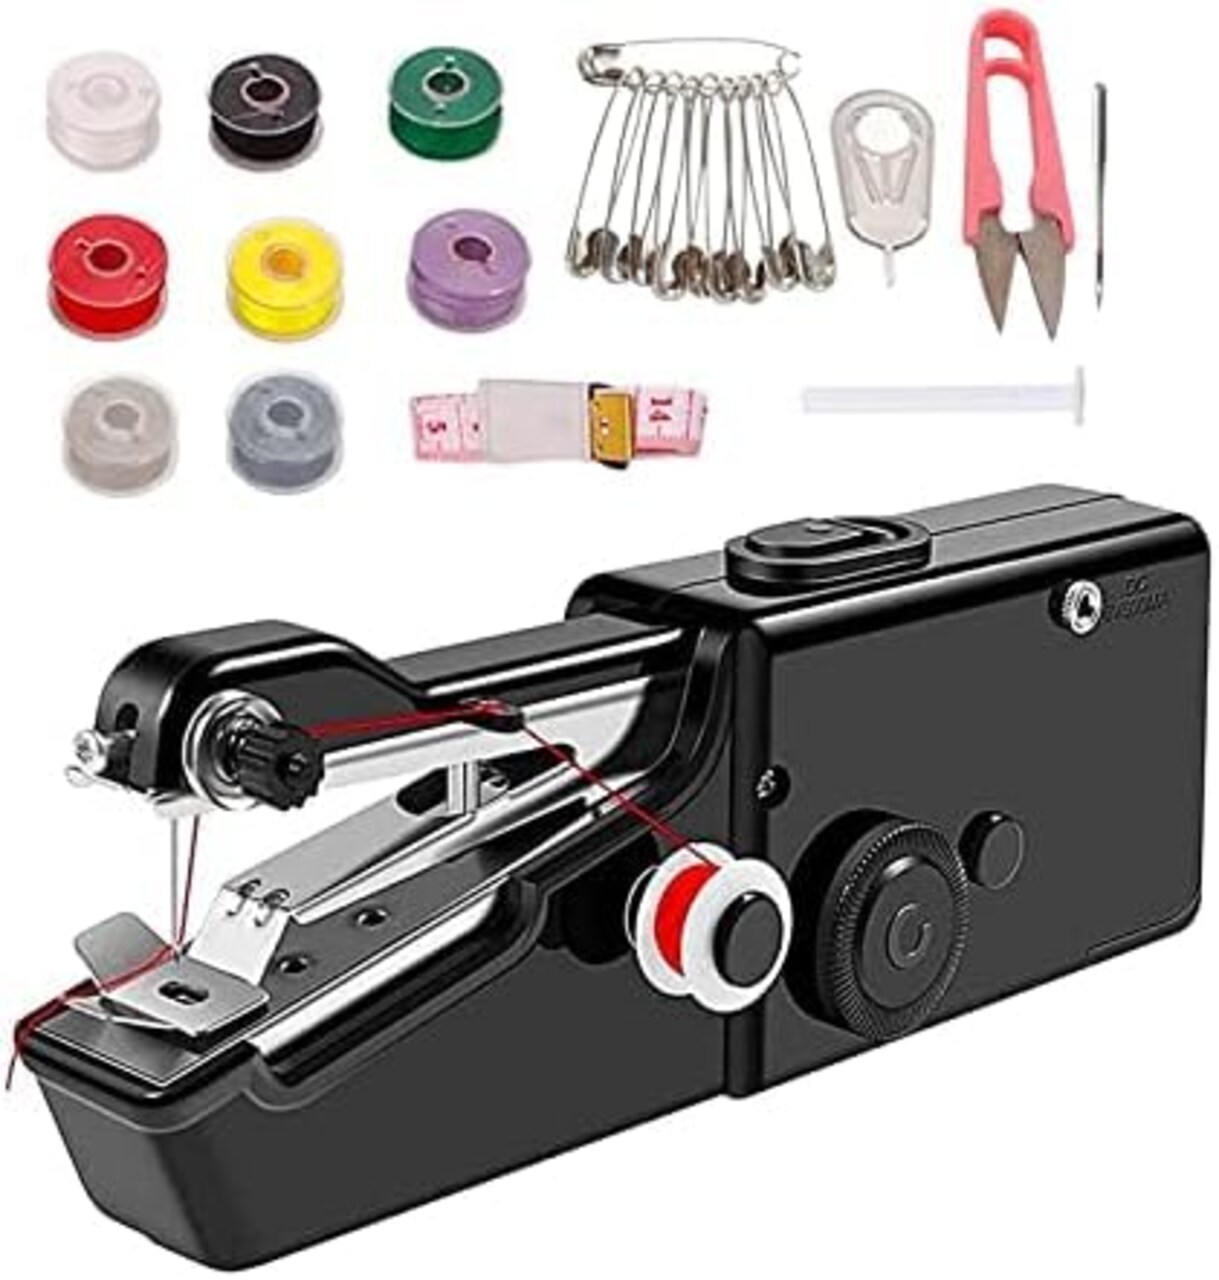 Handheld Sewing Machine, GUSSLM Mini Handheld Sewing Machine for